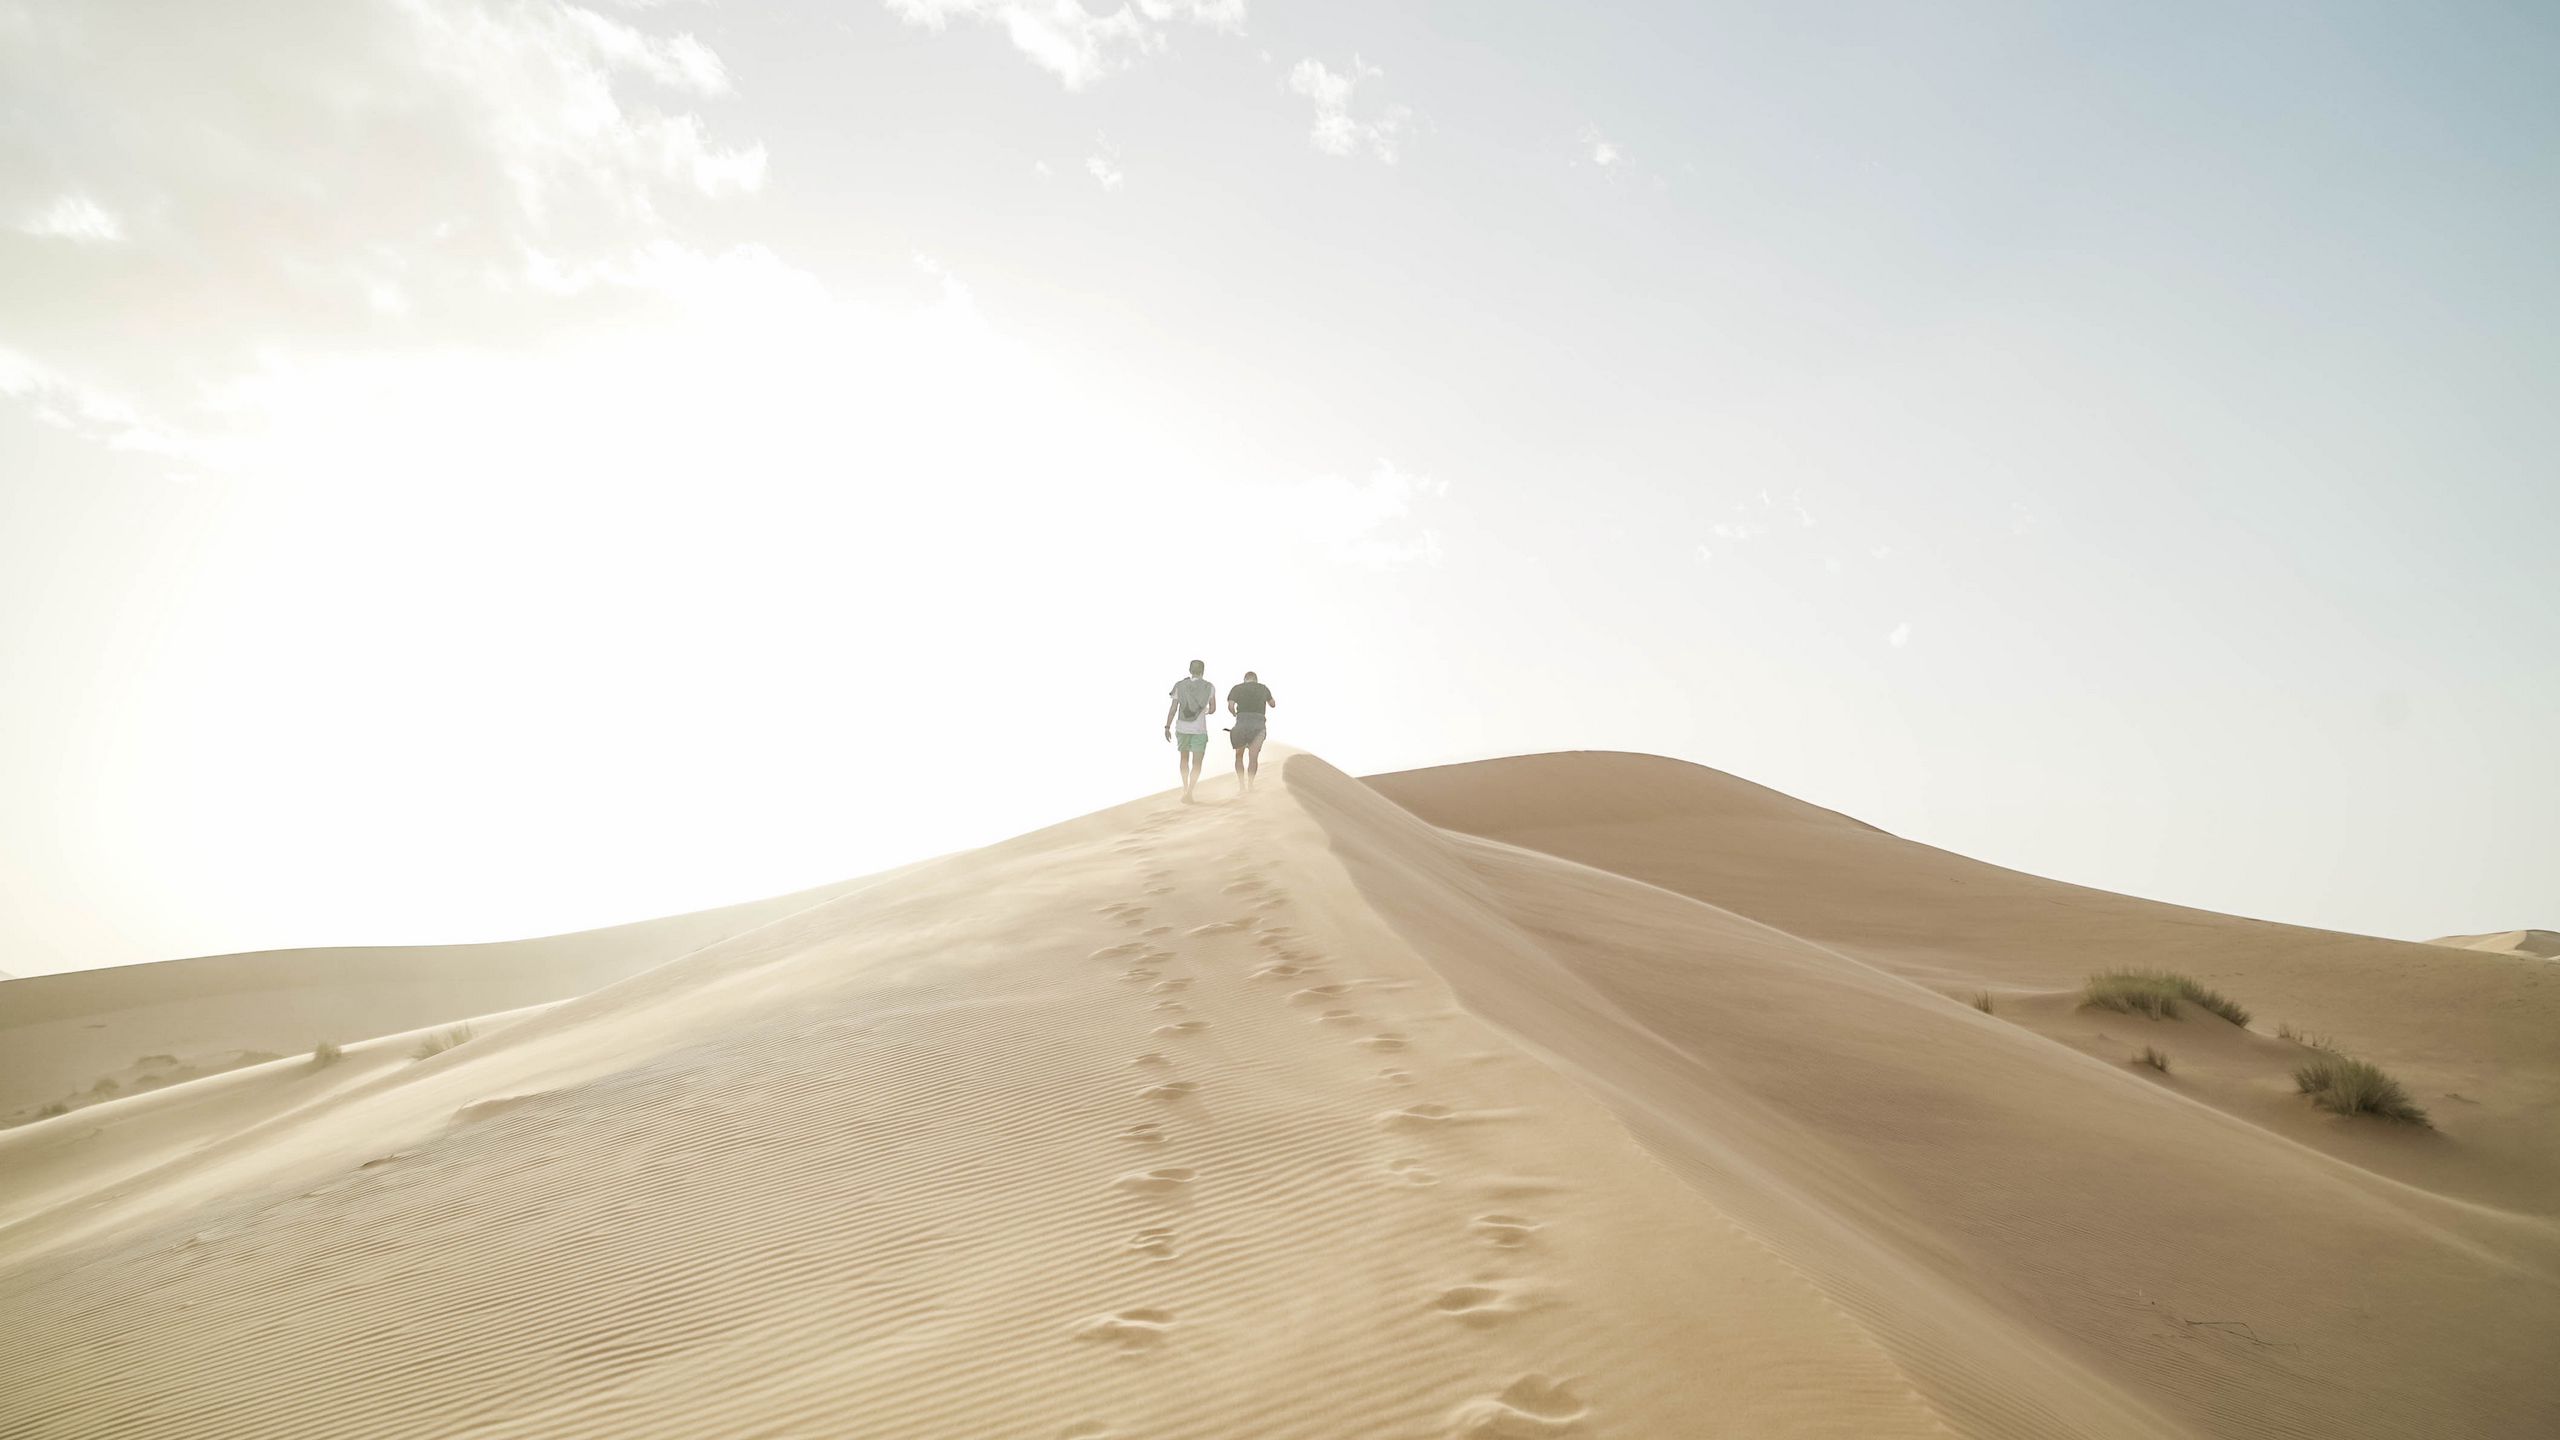 Download wallpaper 2560x1440 desert, people, sand, hills, walk ...